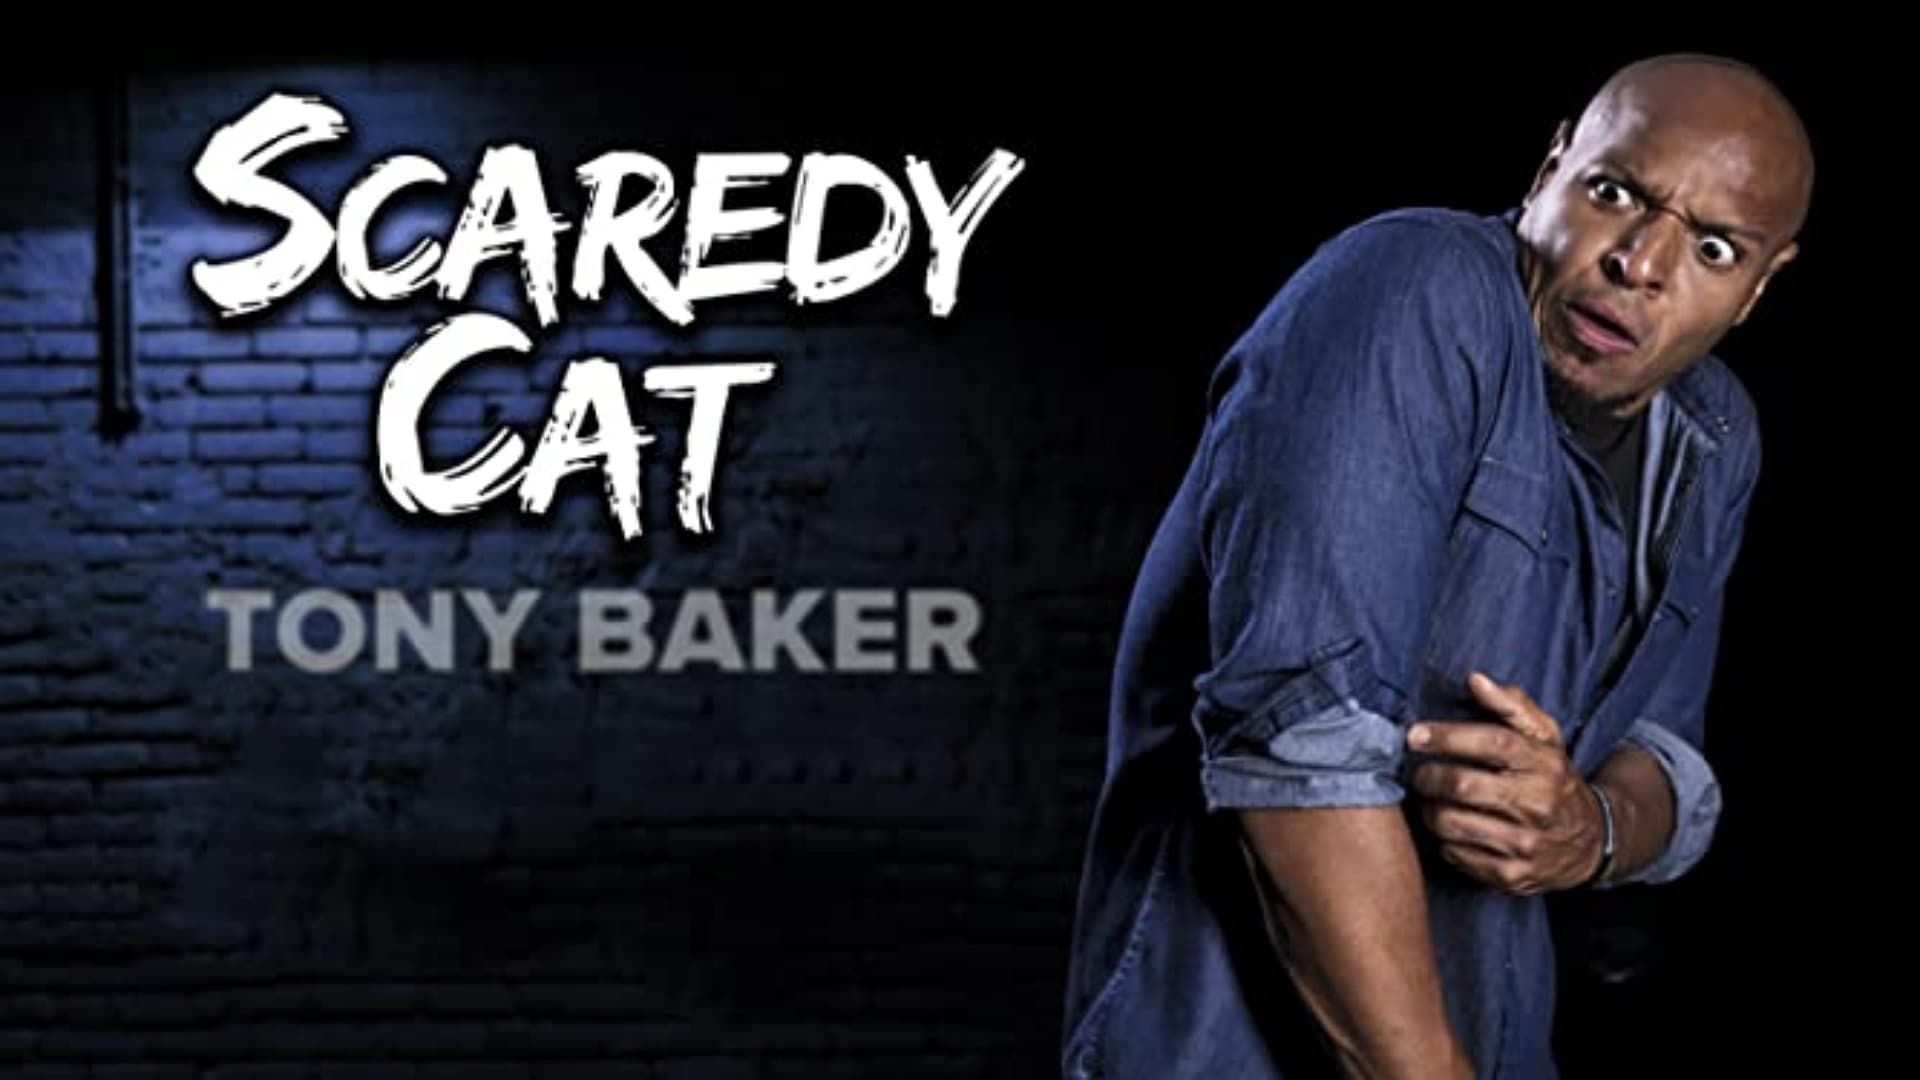 Tony Baker's Scaredy Cat background